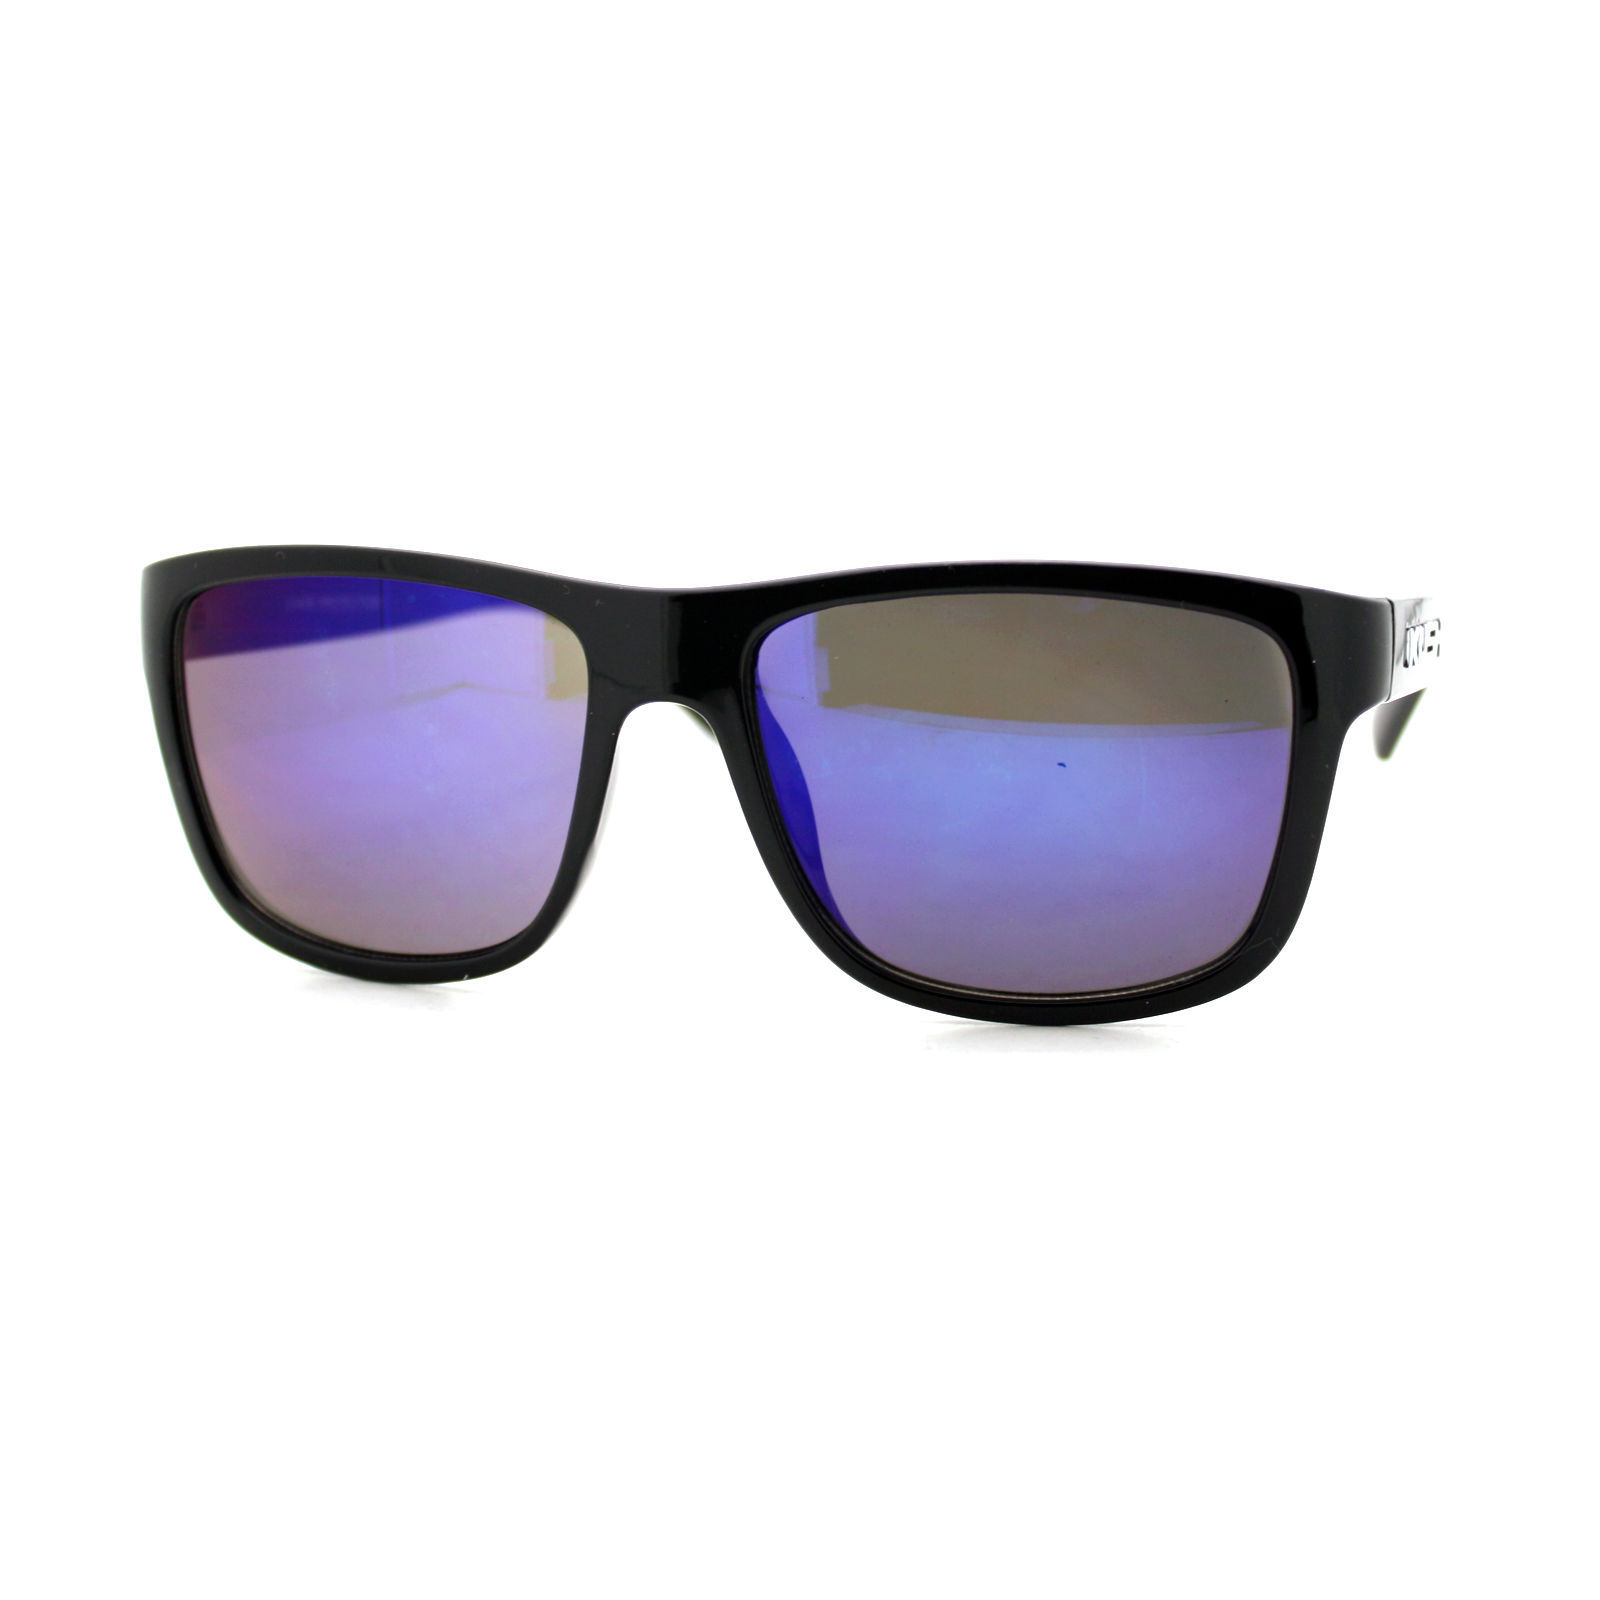 Kush Sunglasses Black Soft Square Frame Unisex Fashion Multicolor Mirror Lens Sunglasses